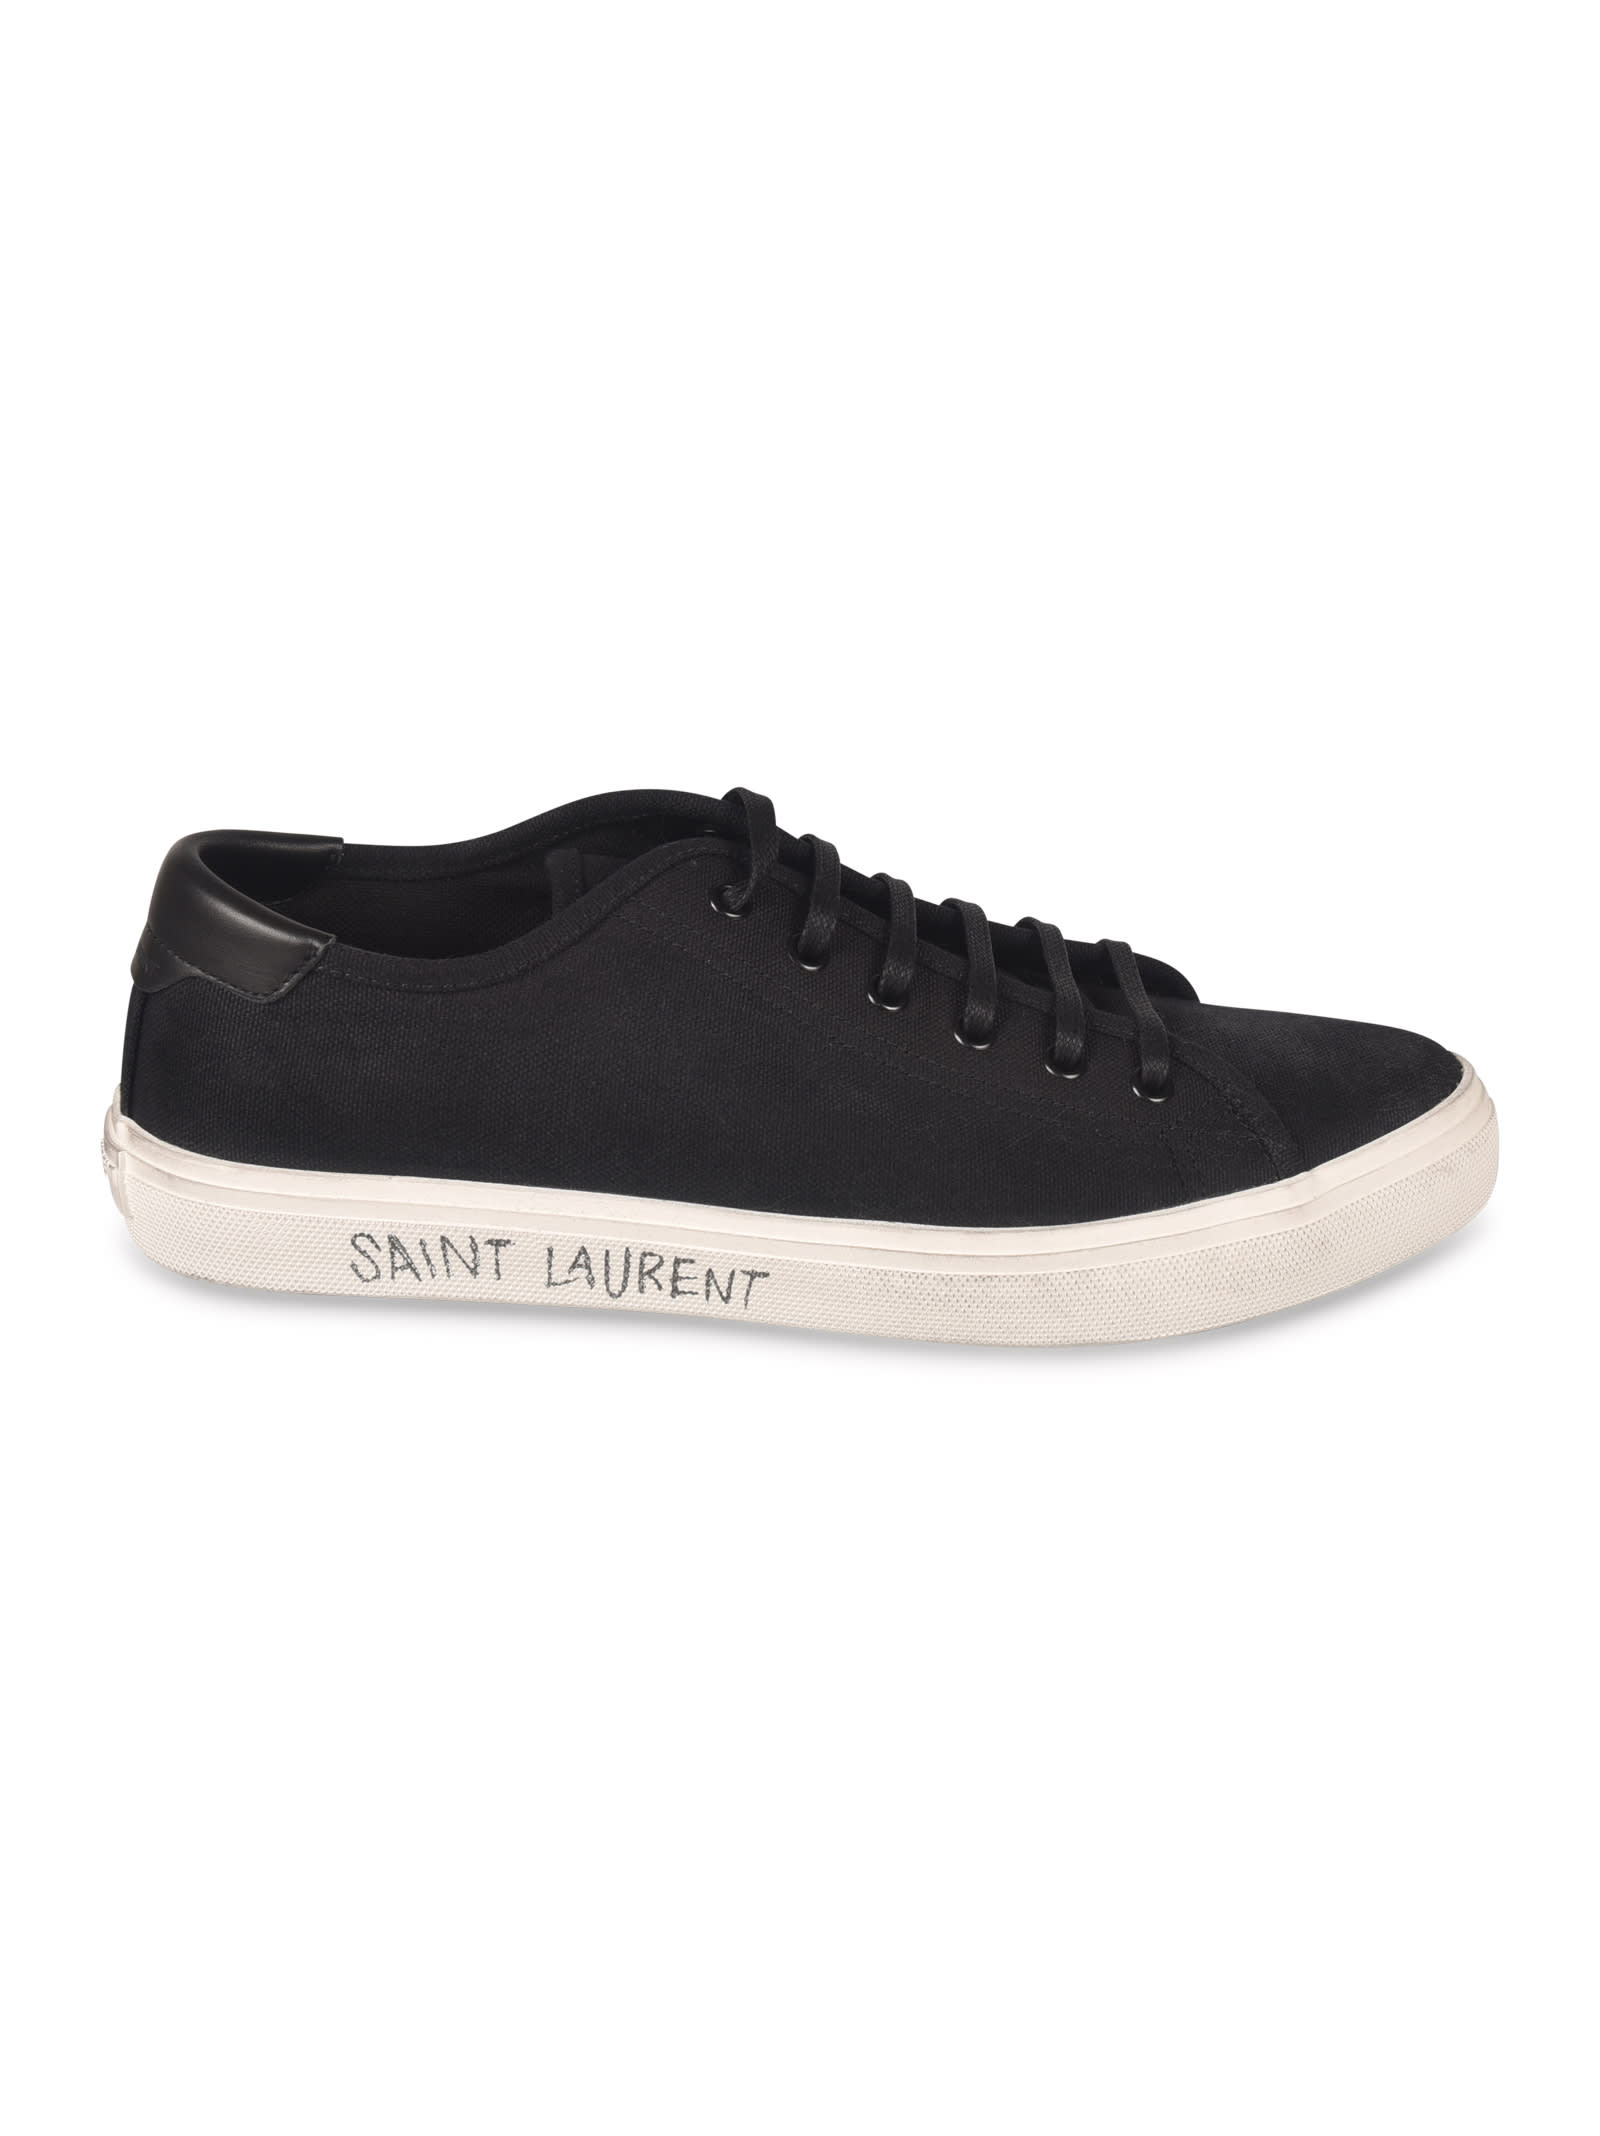 Saint Laurent Malibu Signature Sneakers